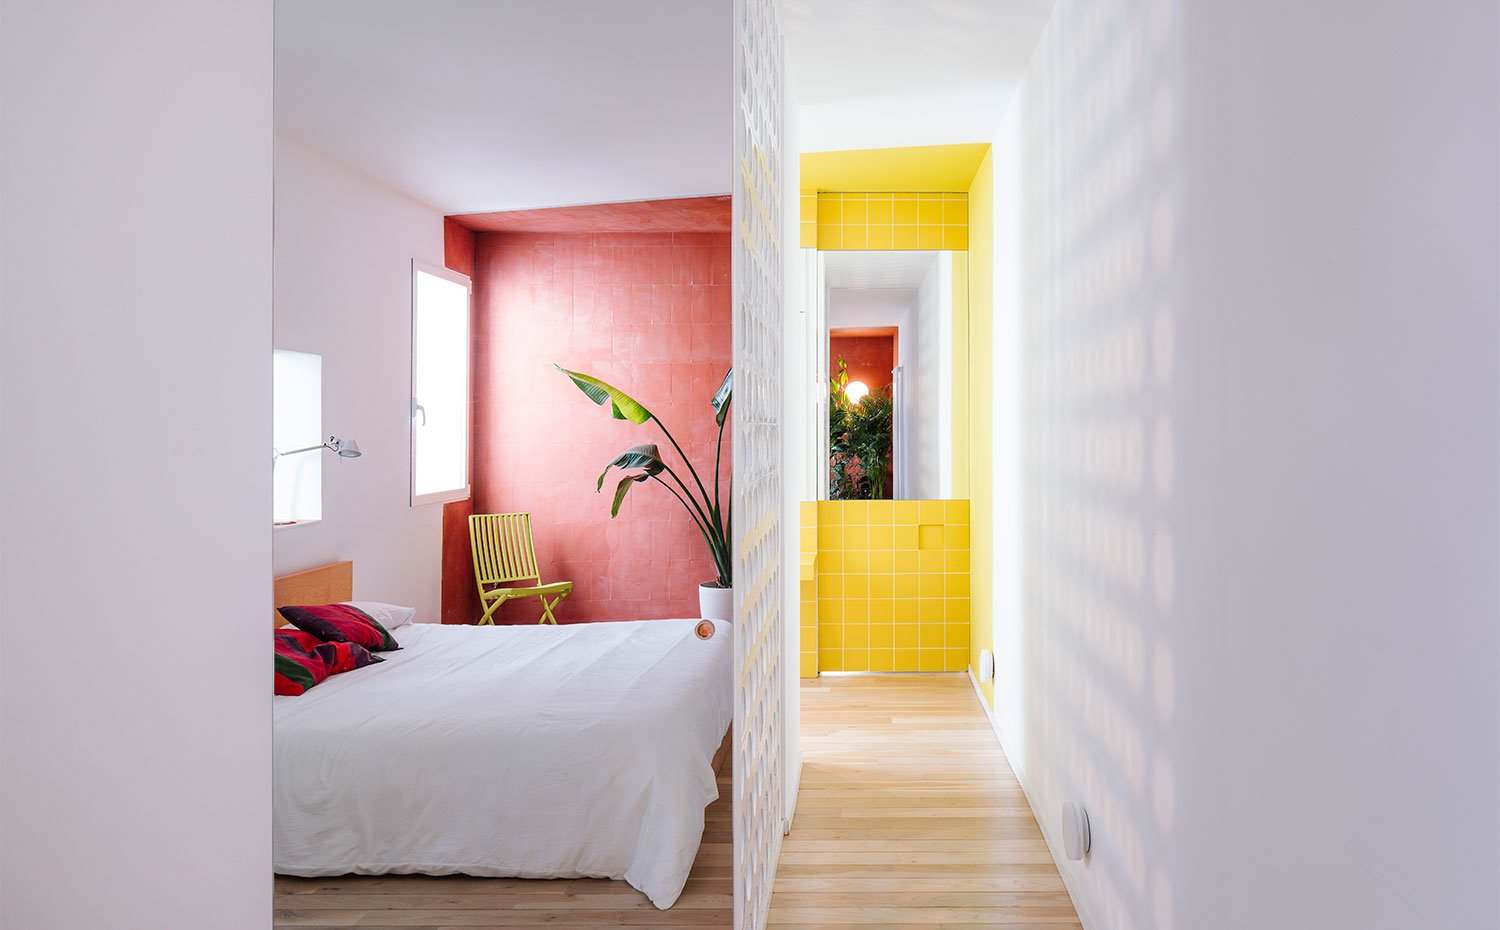 Vista de dormitorio con panel perforado, zona de acceso a cuarto de baño revestido de amarillo